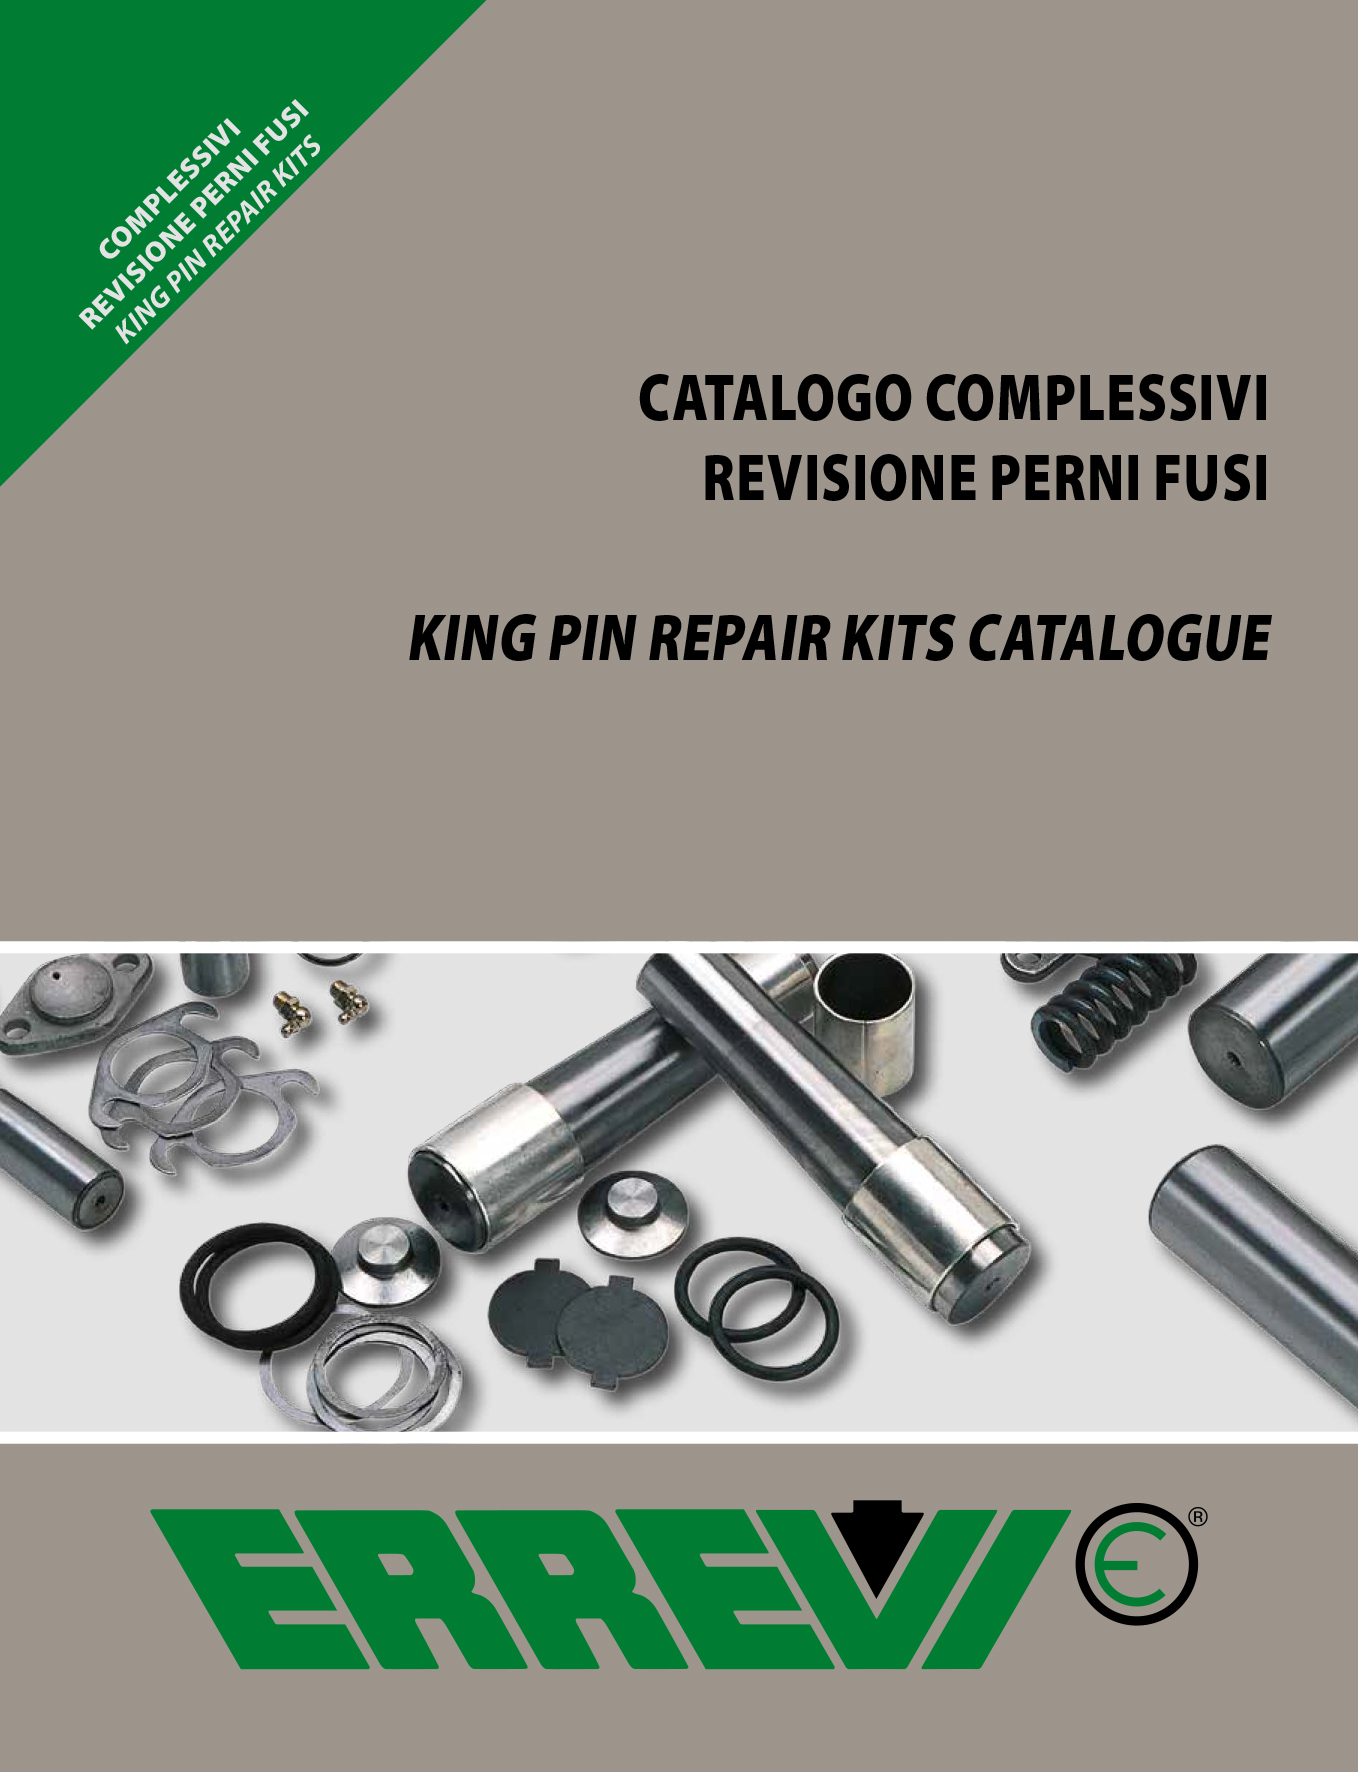 Repairs Kit Catalogue